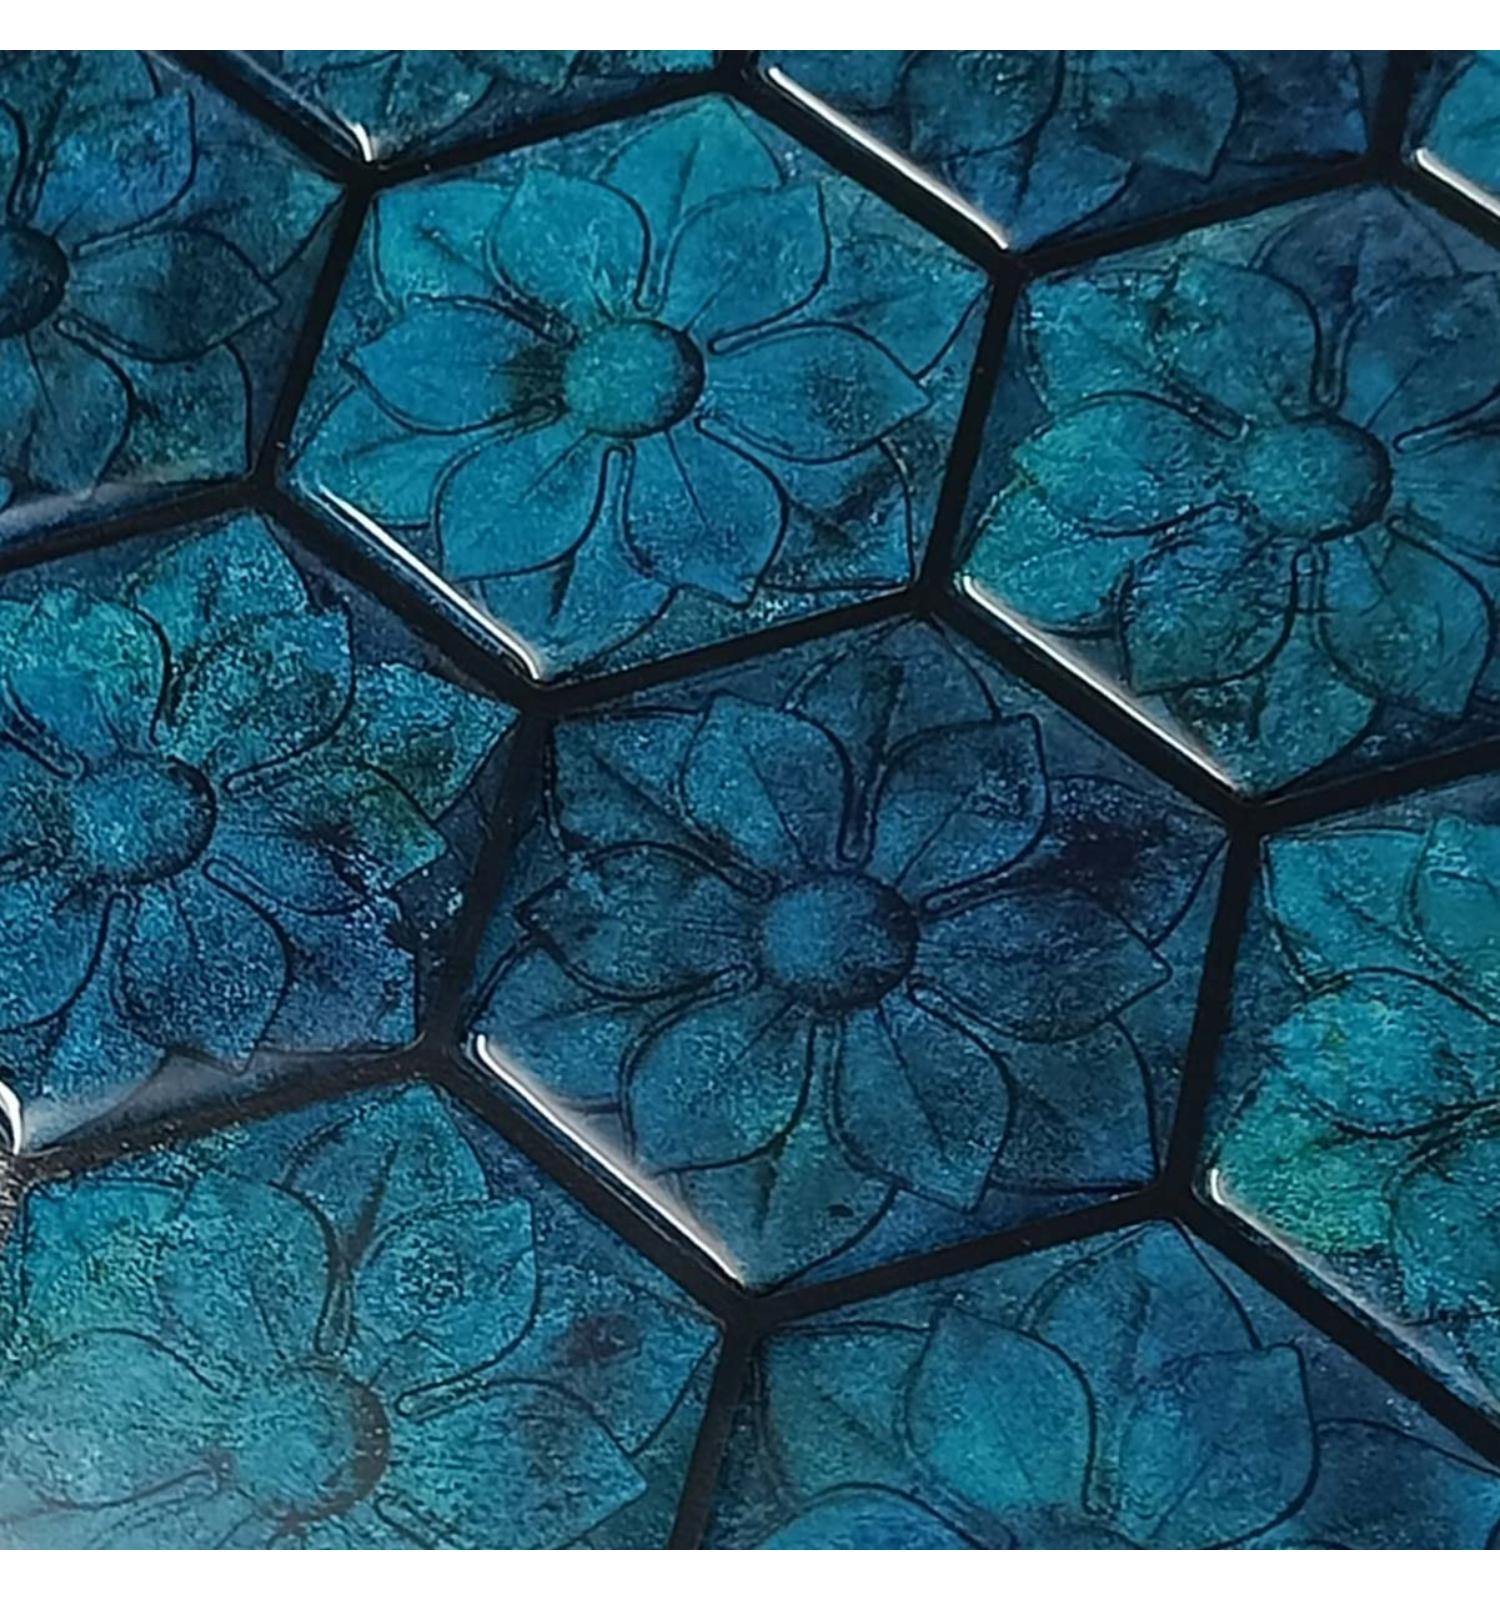 Sea Port Blue peel and Stick Wall Tile | Hexagon Kitchen Backsplash Tiles | self Adhesive Tiles for Home